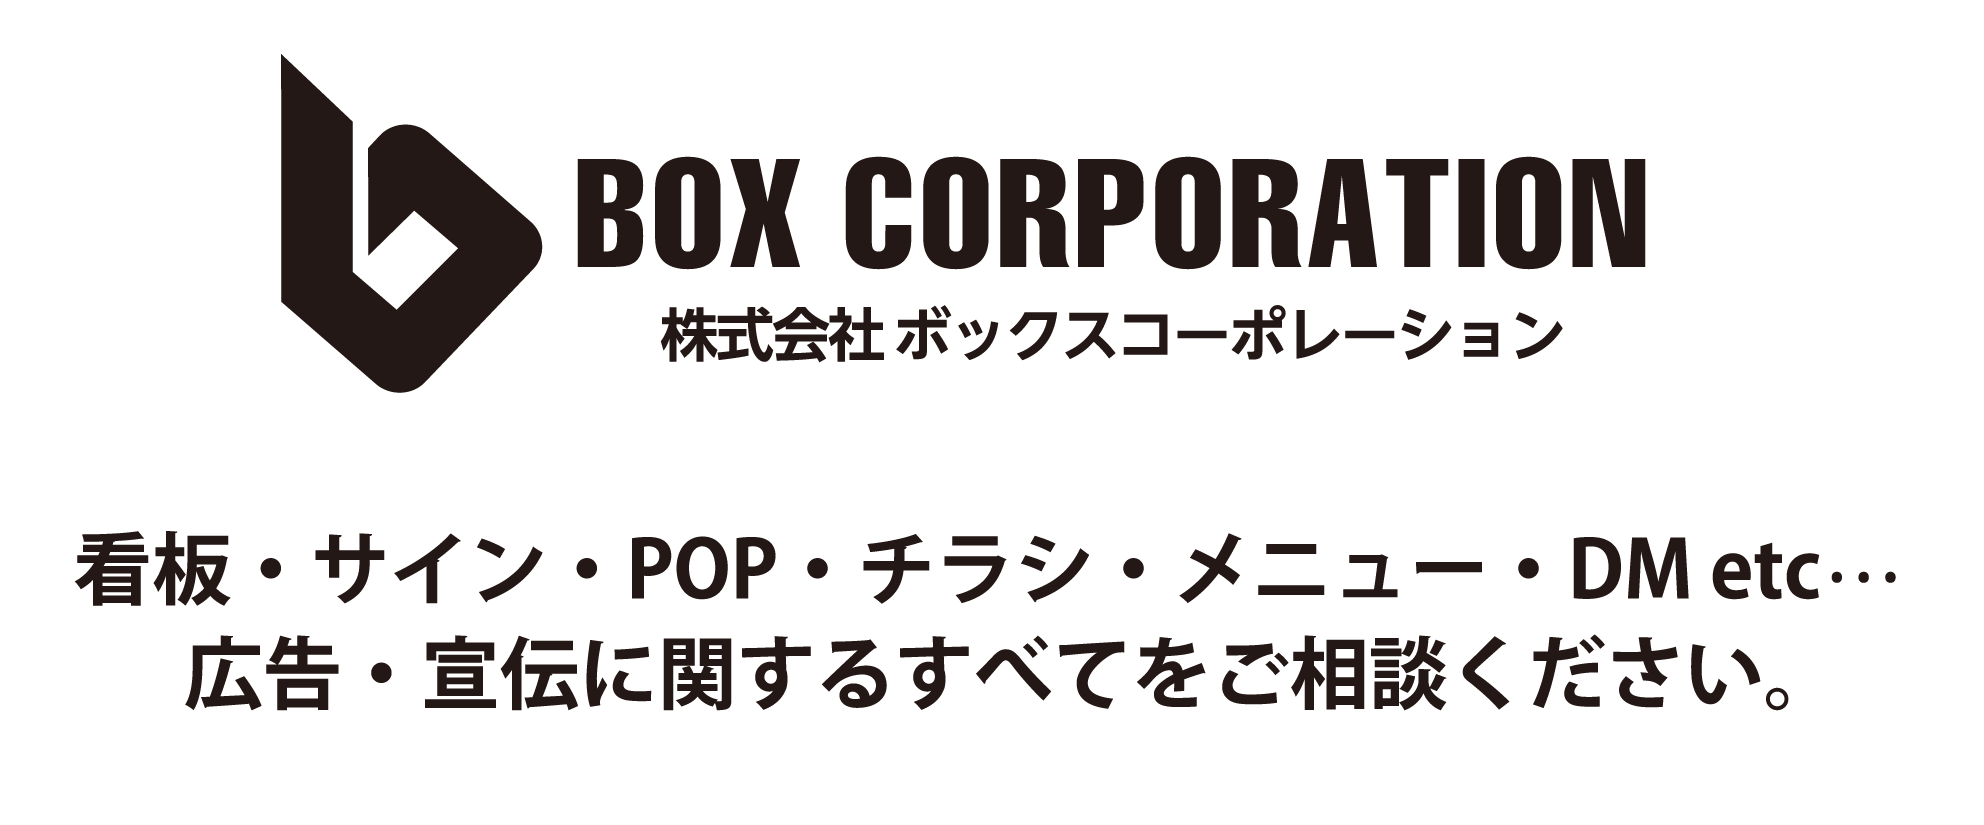 box-corporation